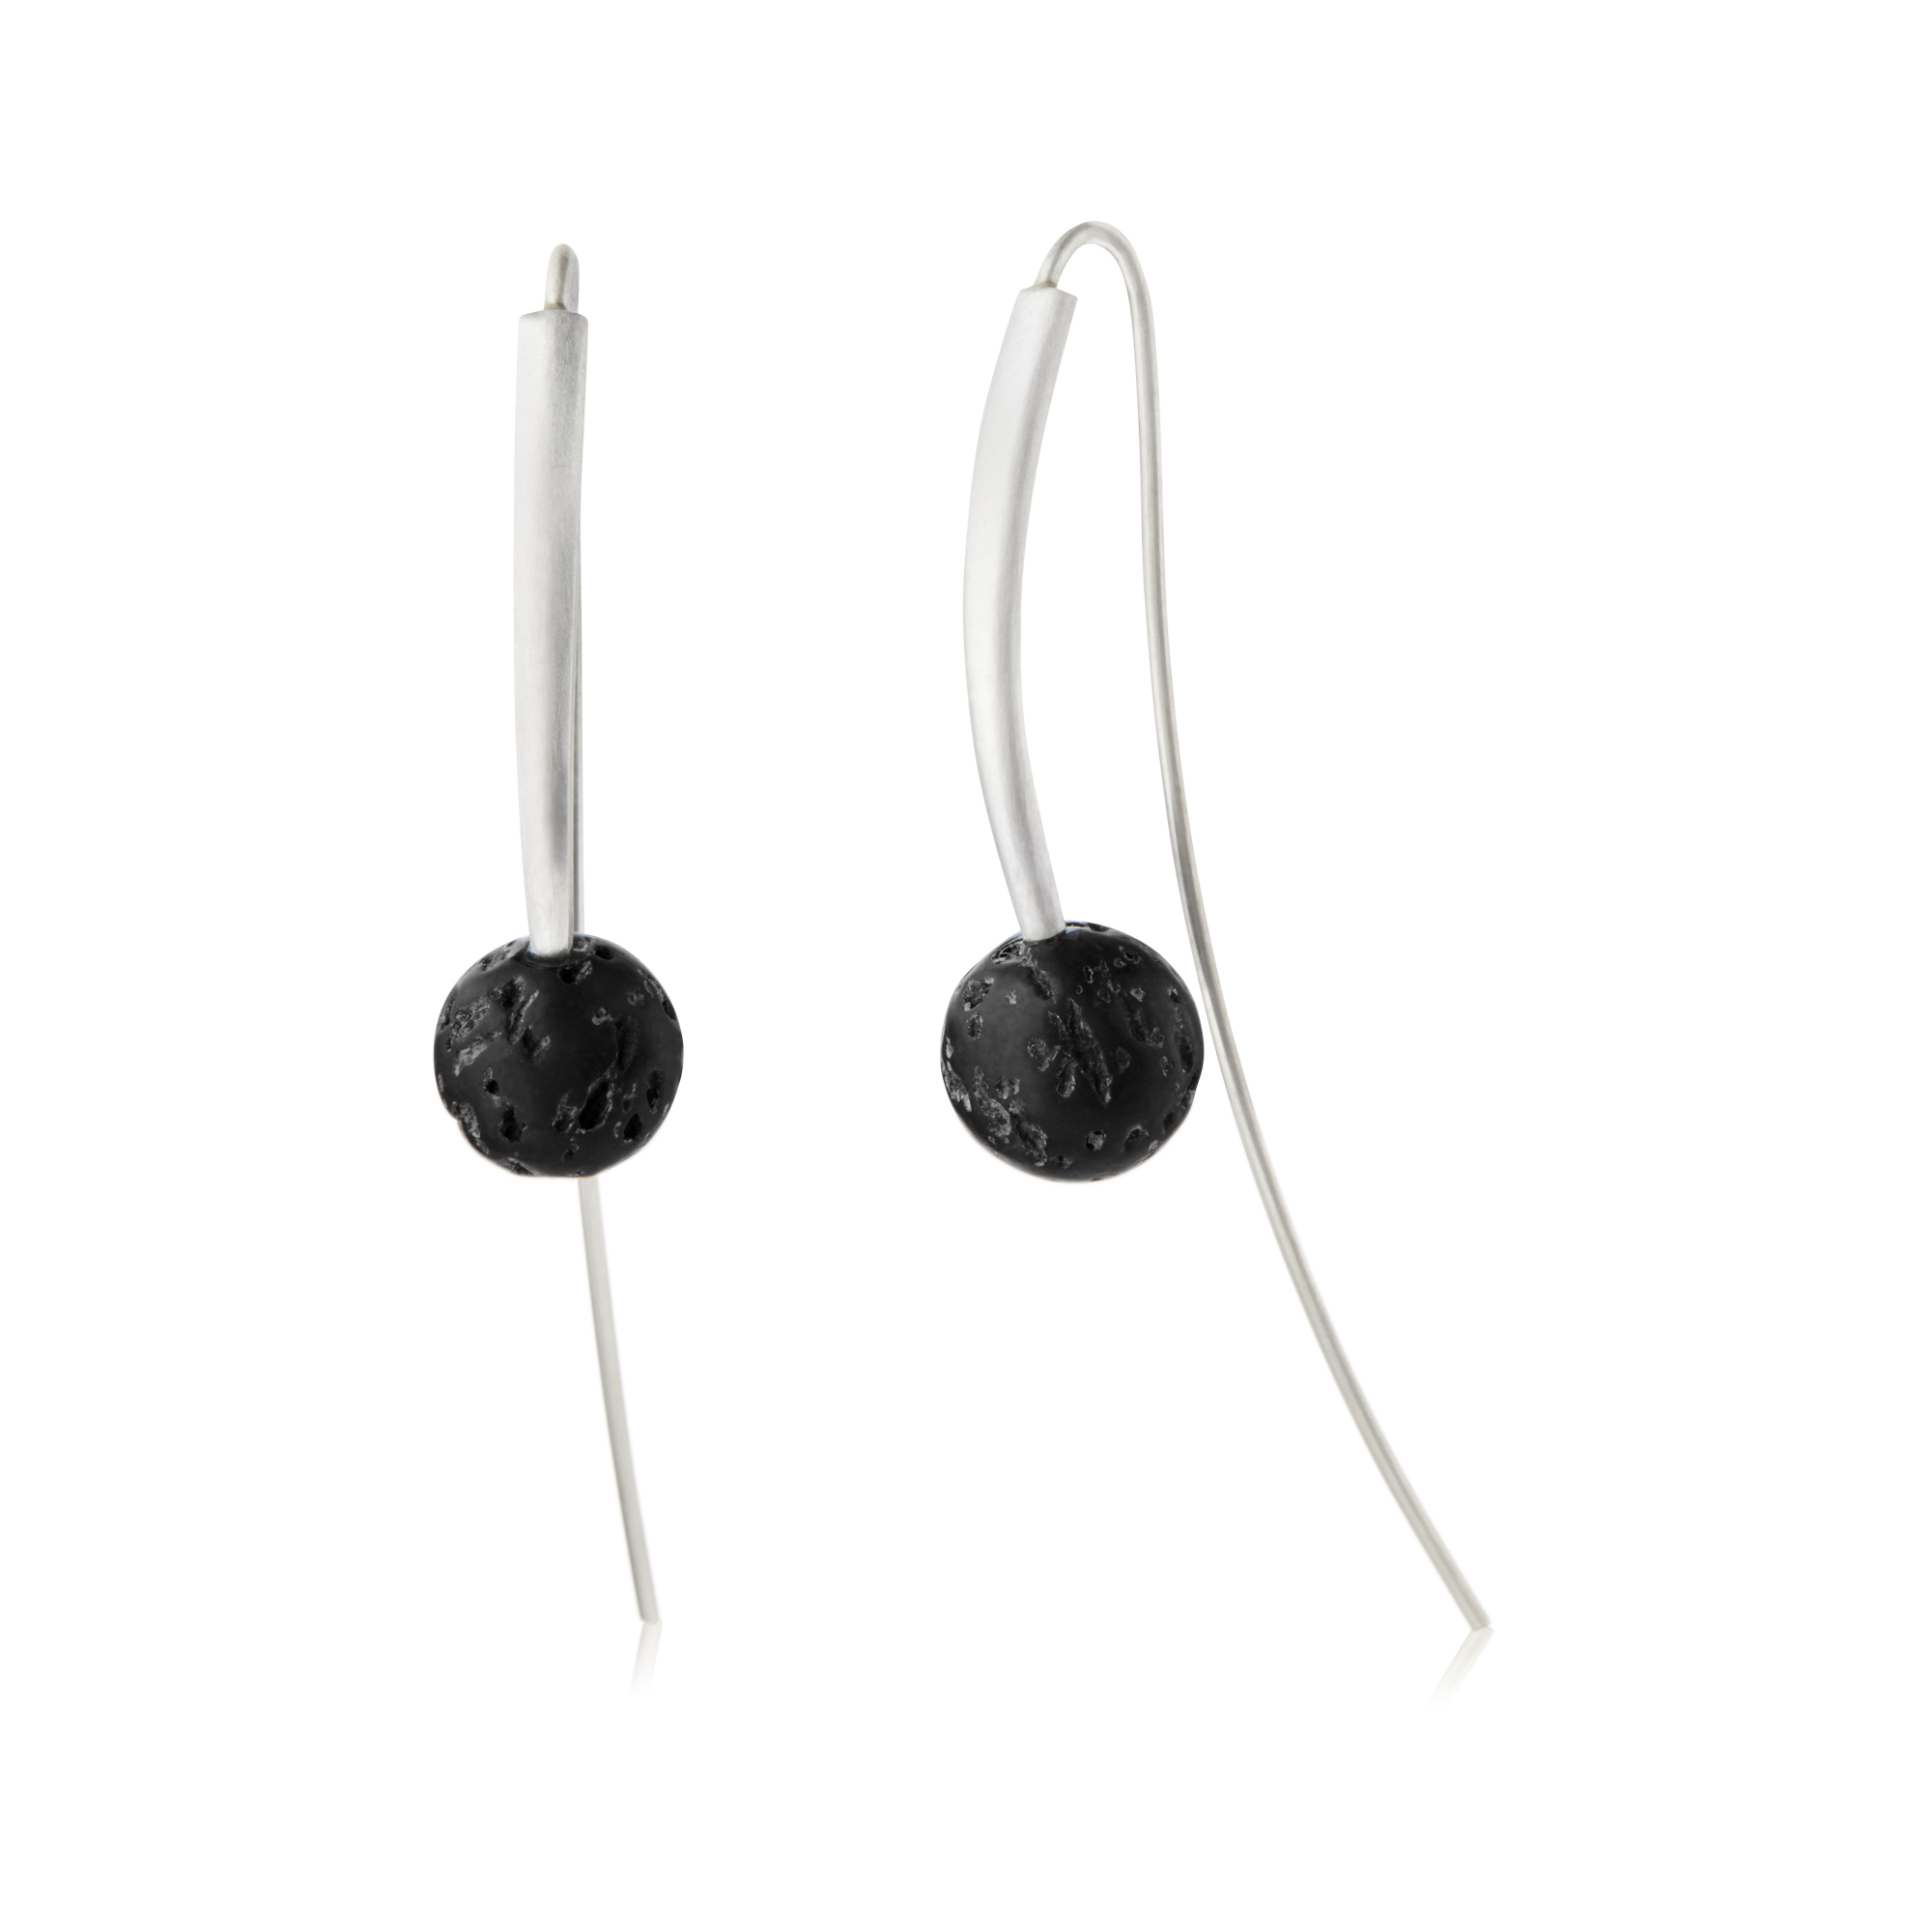 Volcanic rock earrings